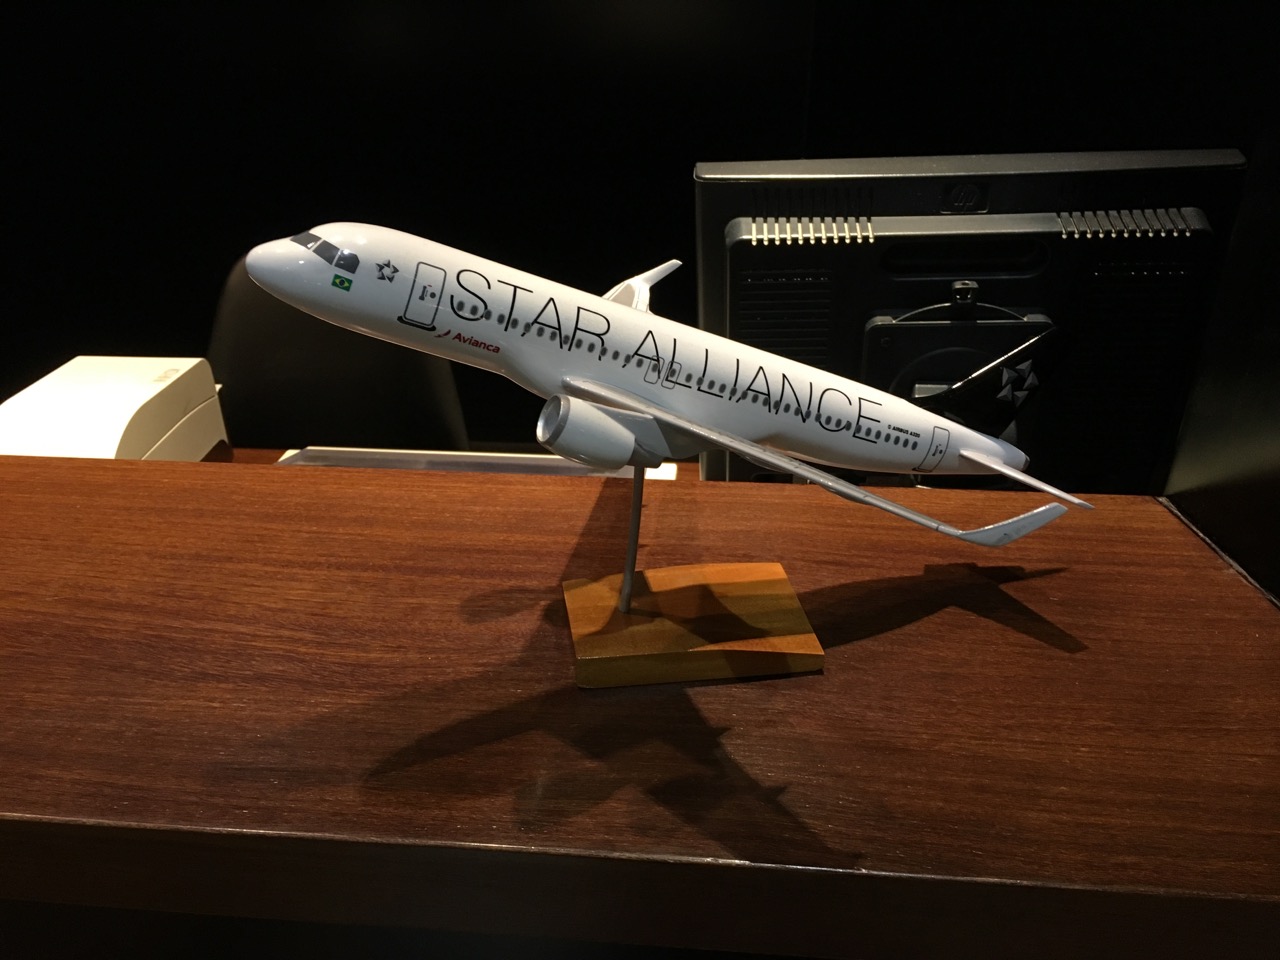 Star Alliance Model Airplane